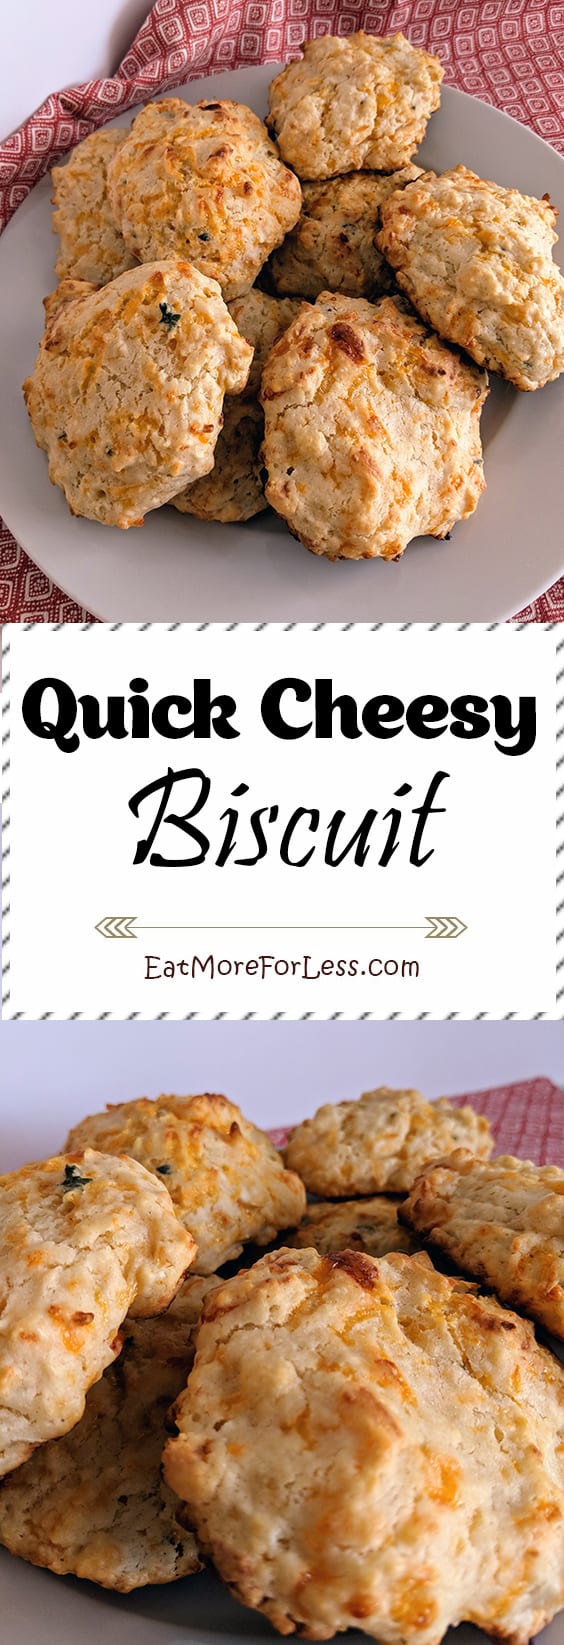 Quick Cheesy Biscuit Recipe